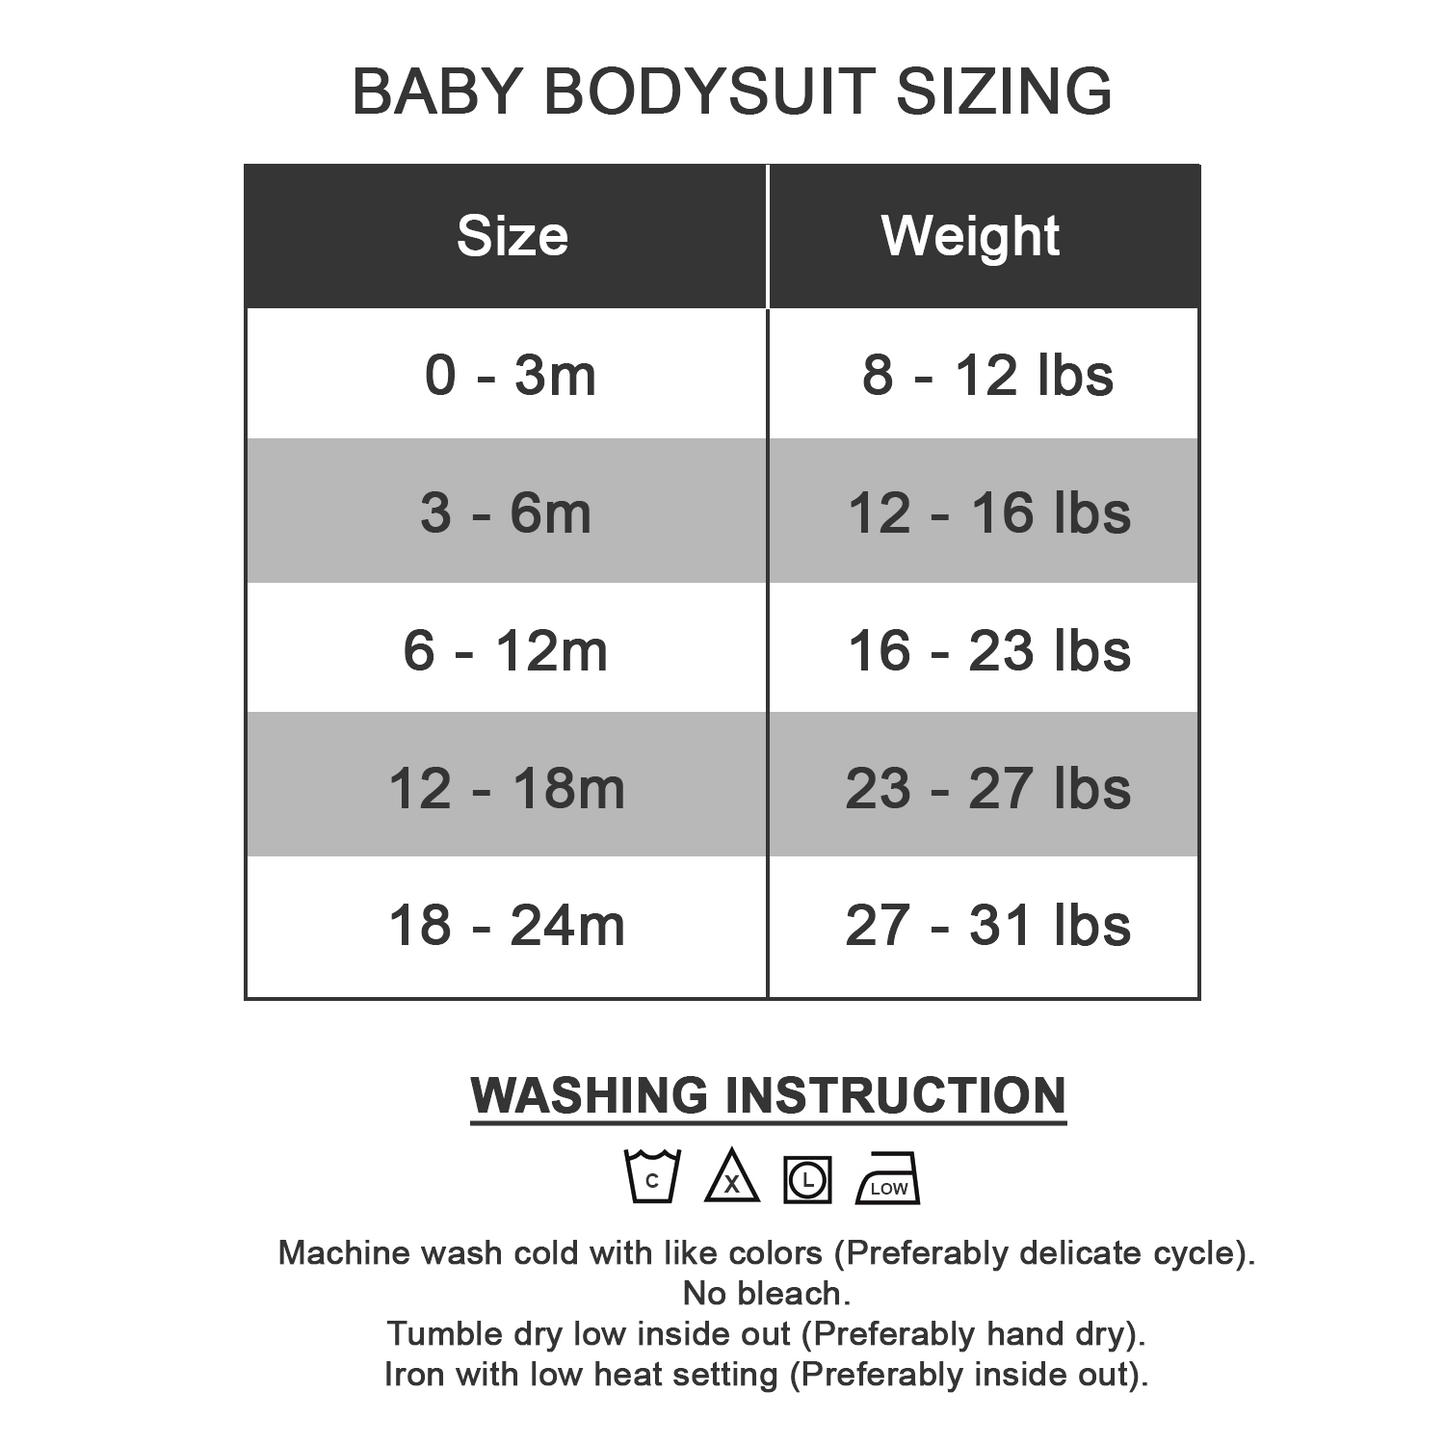 Endanzoo Organic Baby Bodysuit - Call Grandma